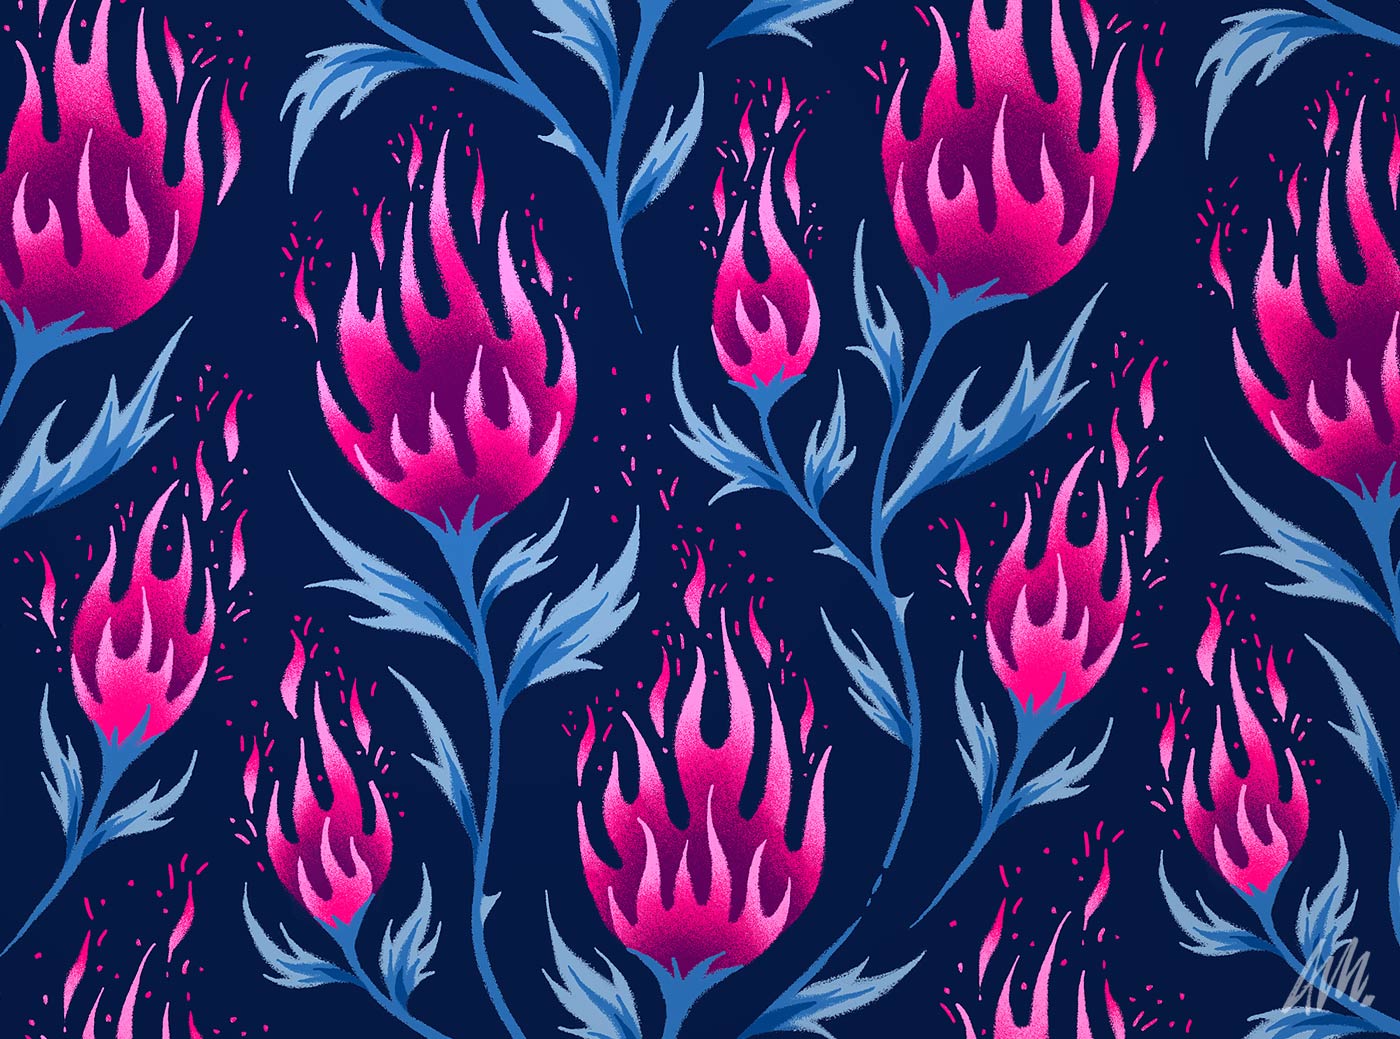 Fire flower, floral pattern illustration dark pink by Andrea Muller